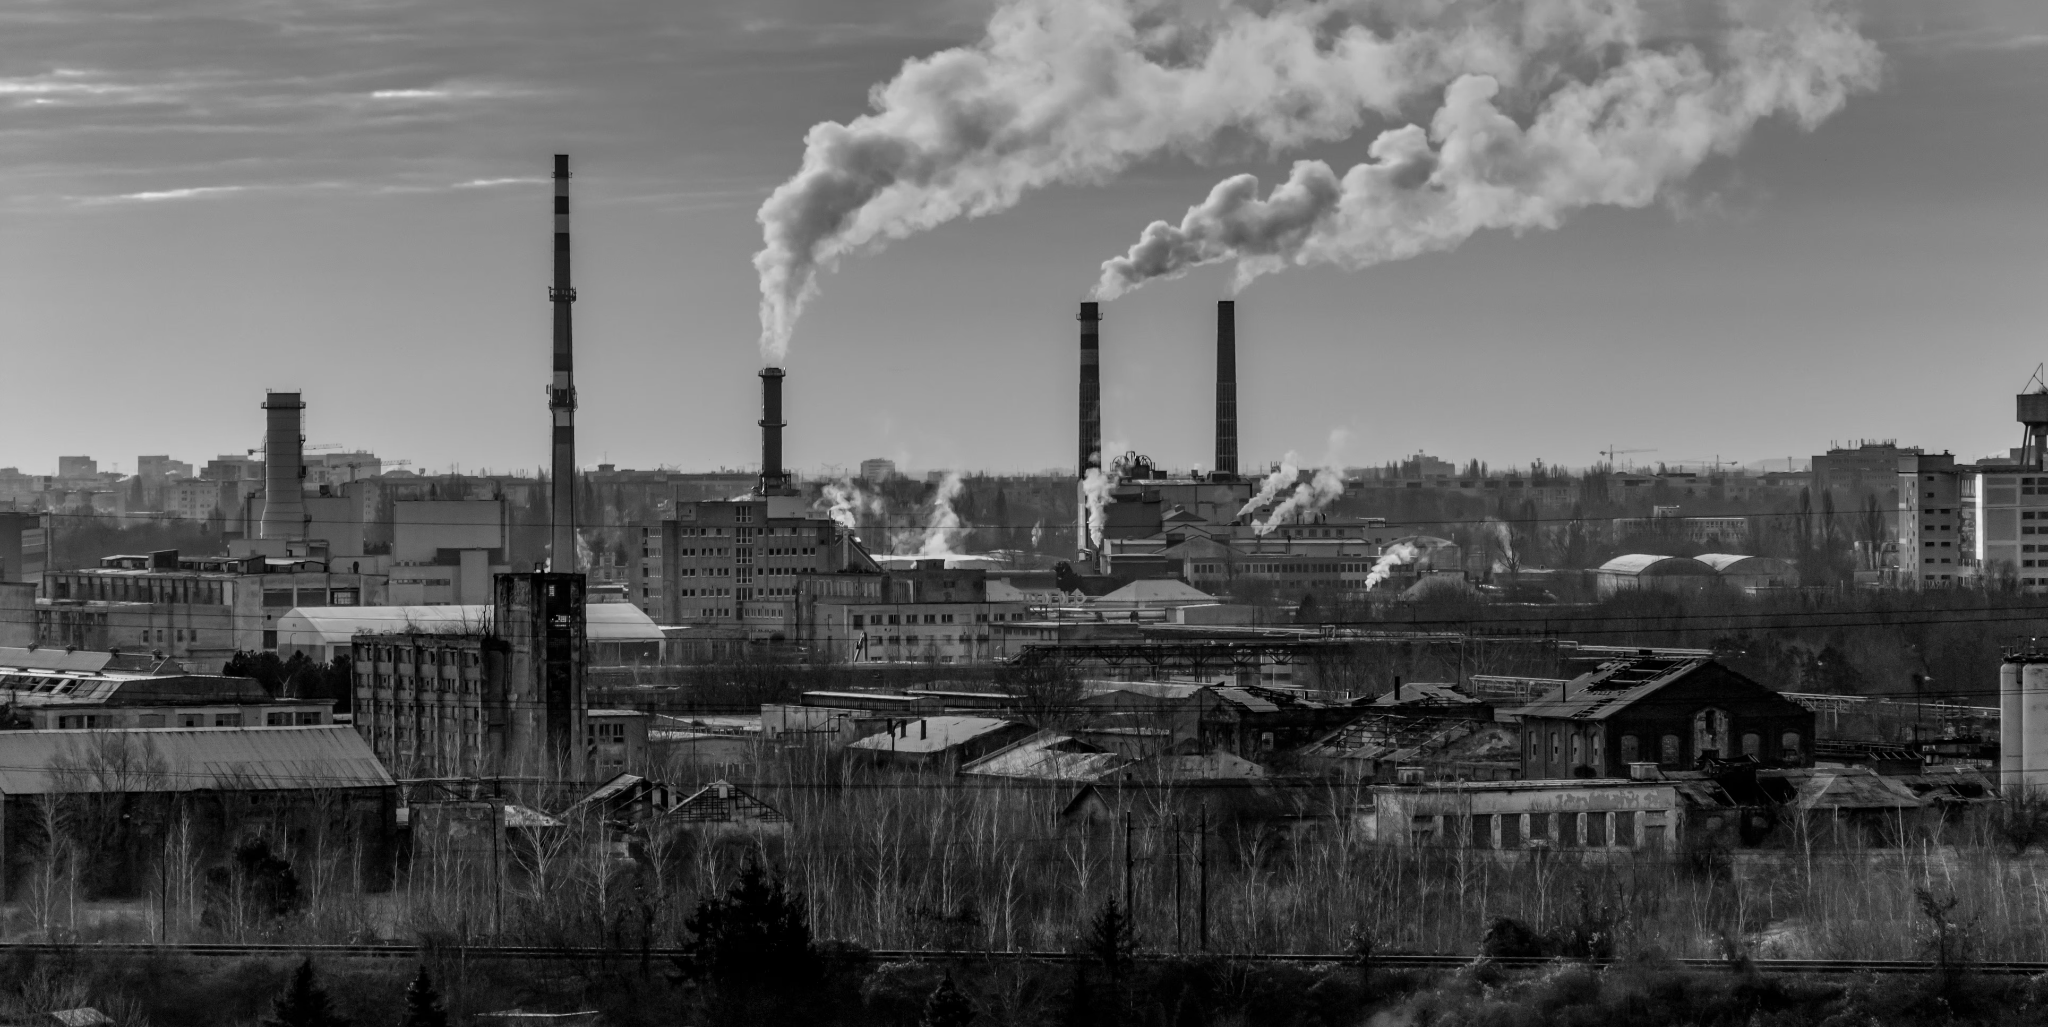 Old industrial Smoke Stacks generating toxins